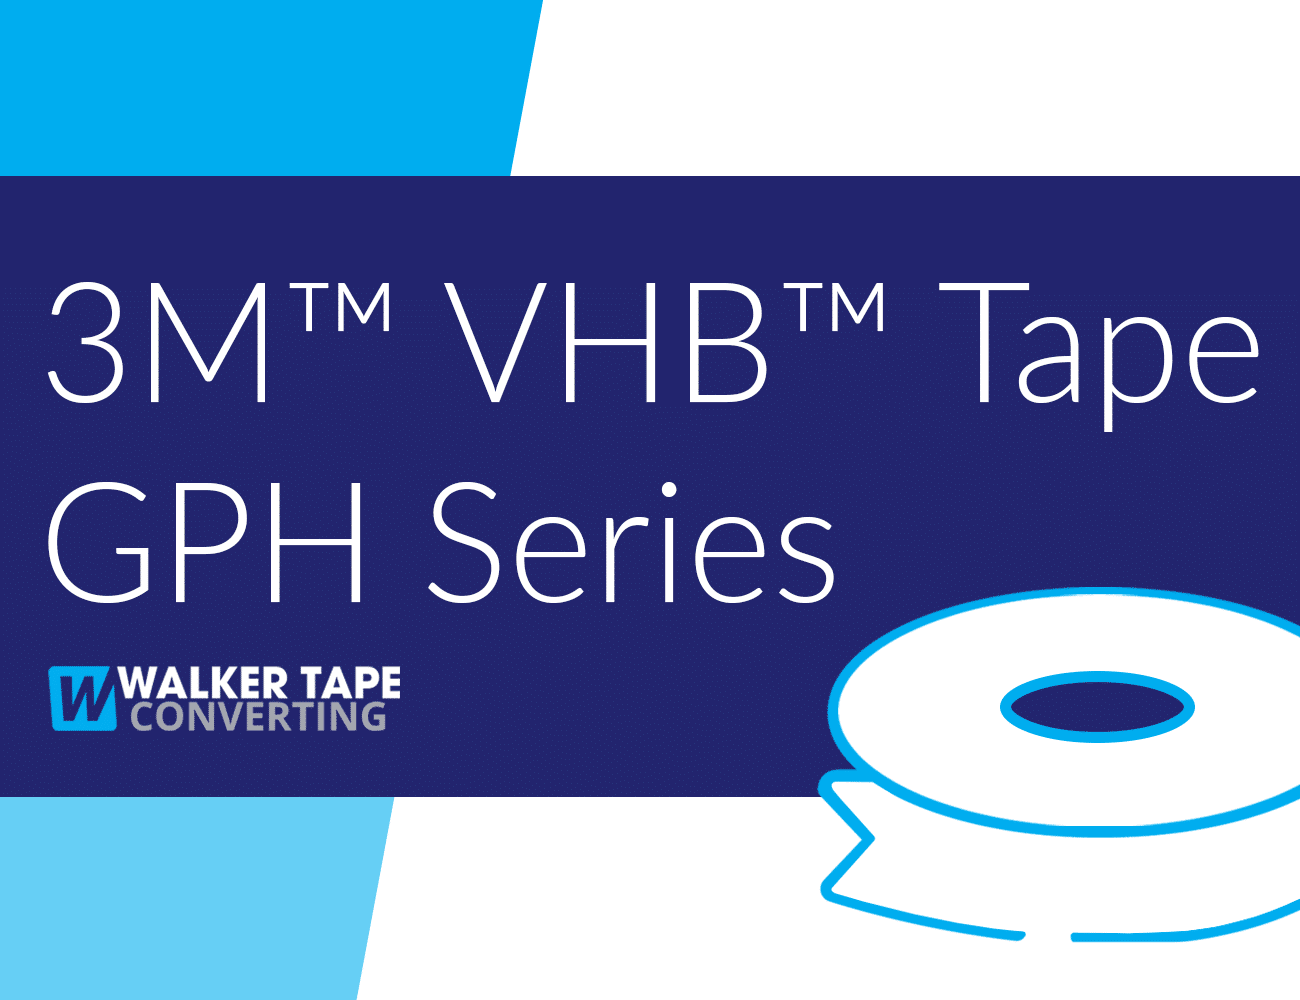 3M VHB Tape Glass Fastening System